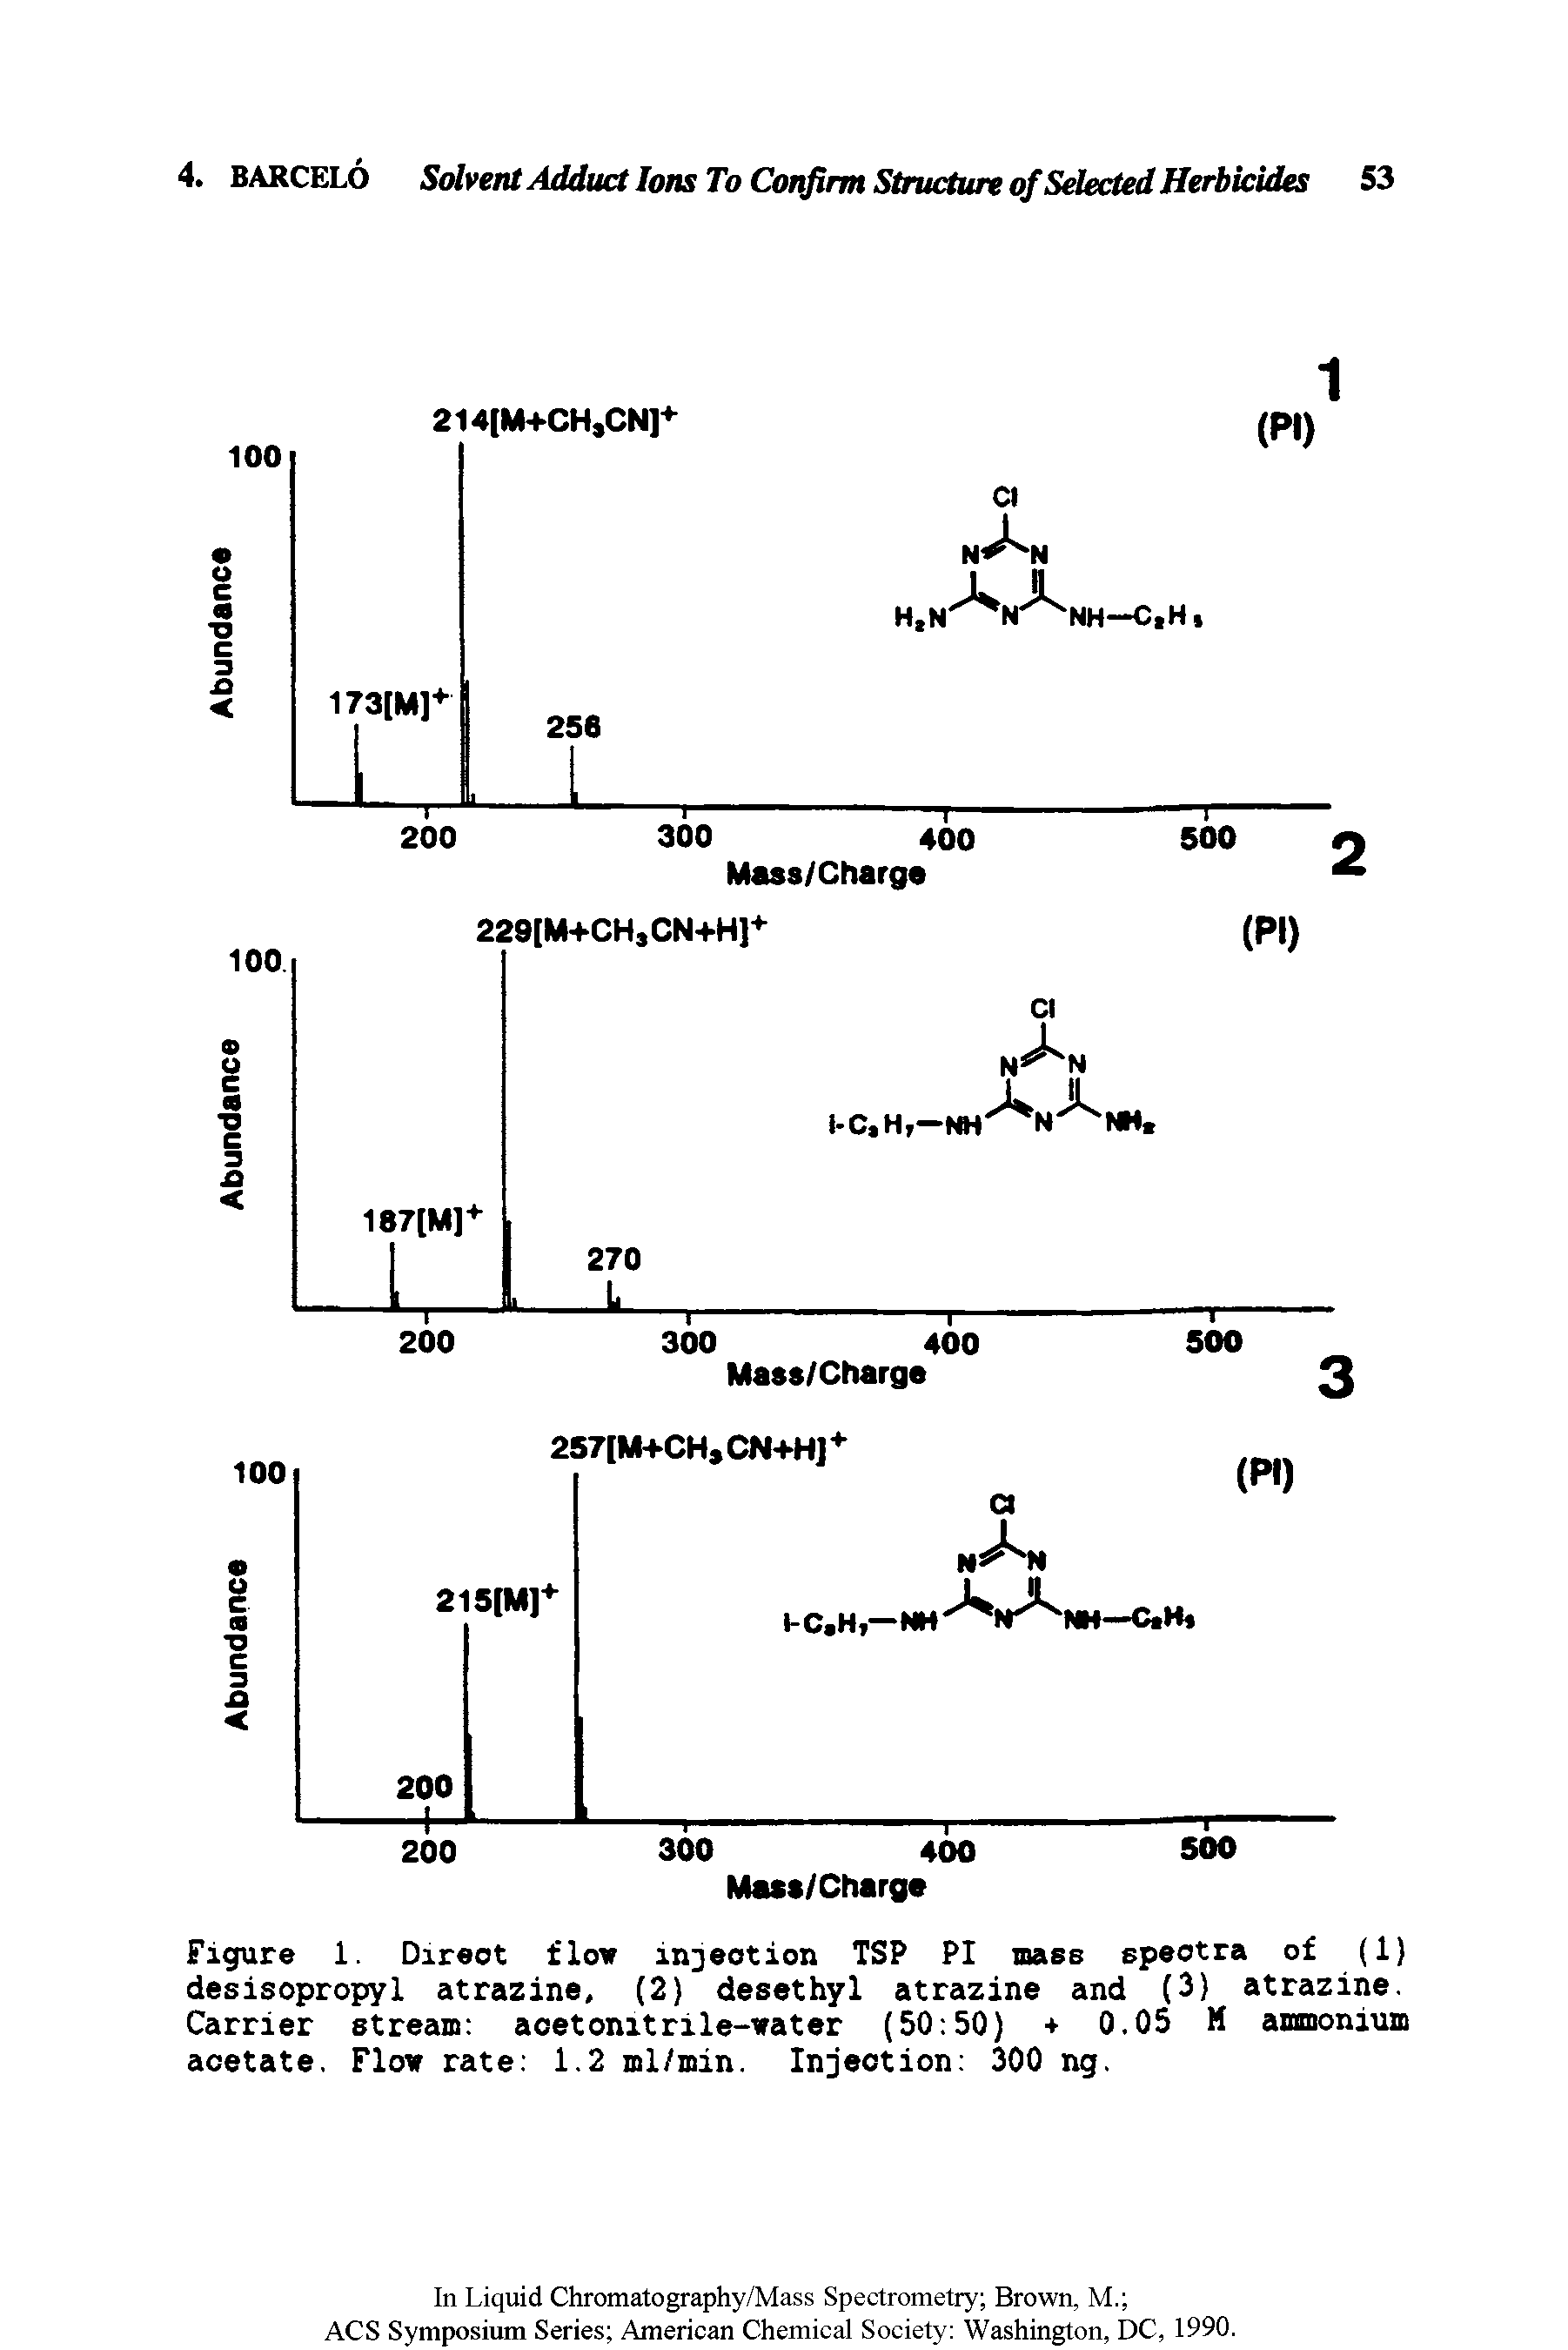 Figure 1. Direct flow infection TSP PI mass spectra of (1) desisopropyl atrazine, (2) desethyl atrazine and (3) atrazine. Carrier stream acetonitrile-water (50 50) + 0.05 M ammonium...